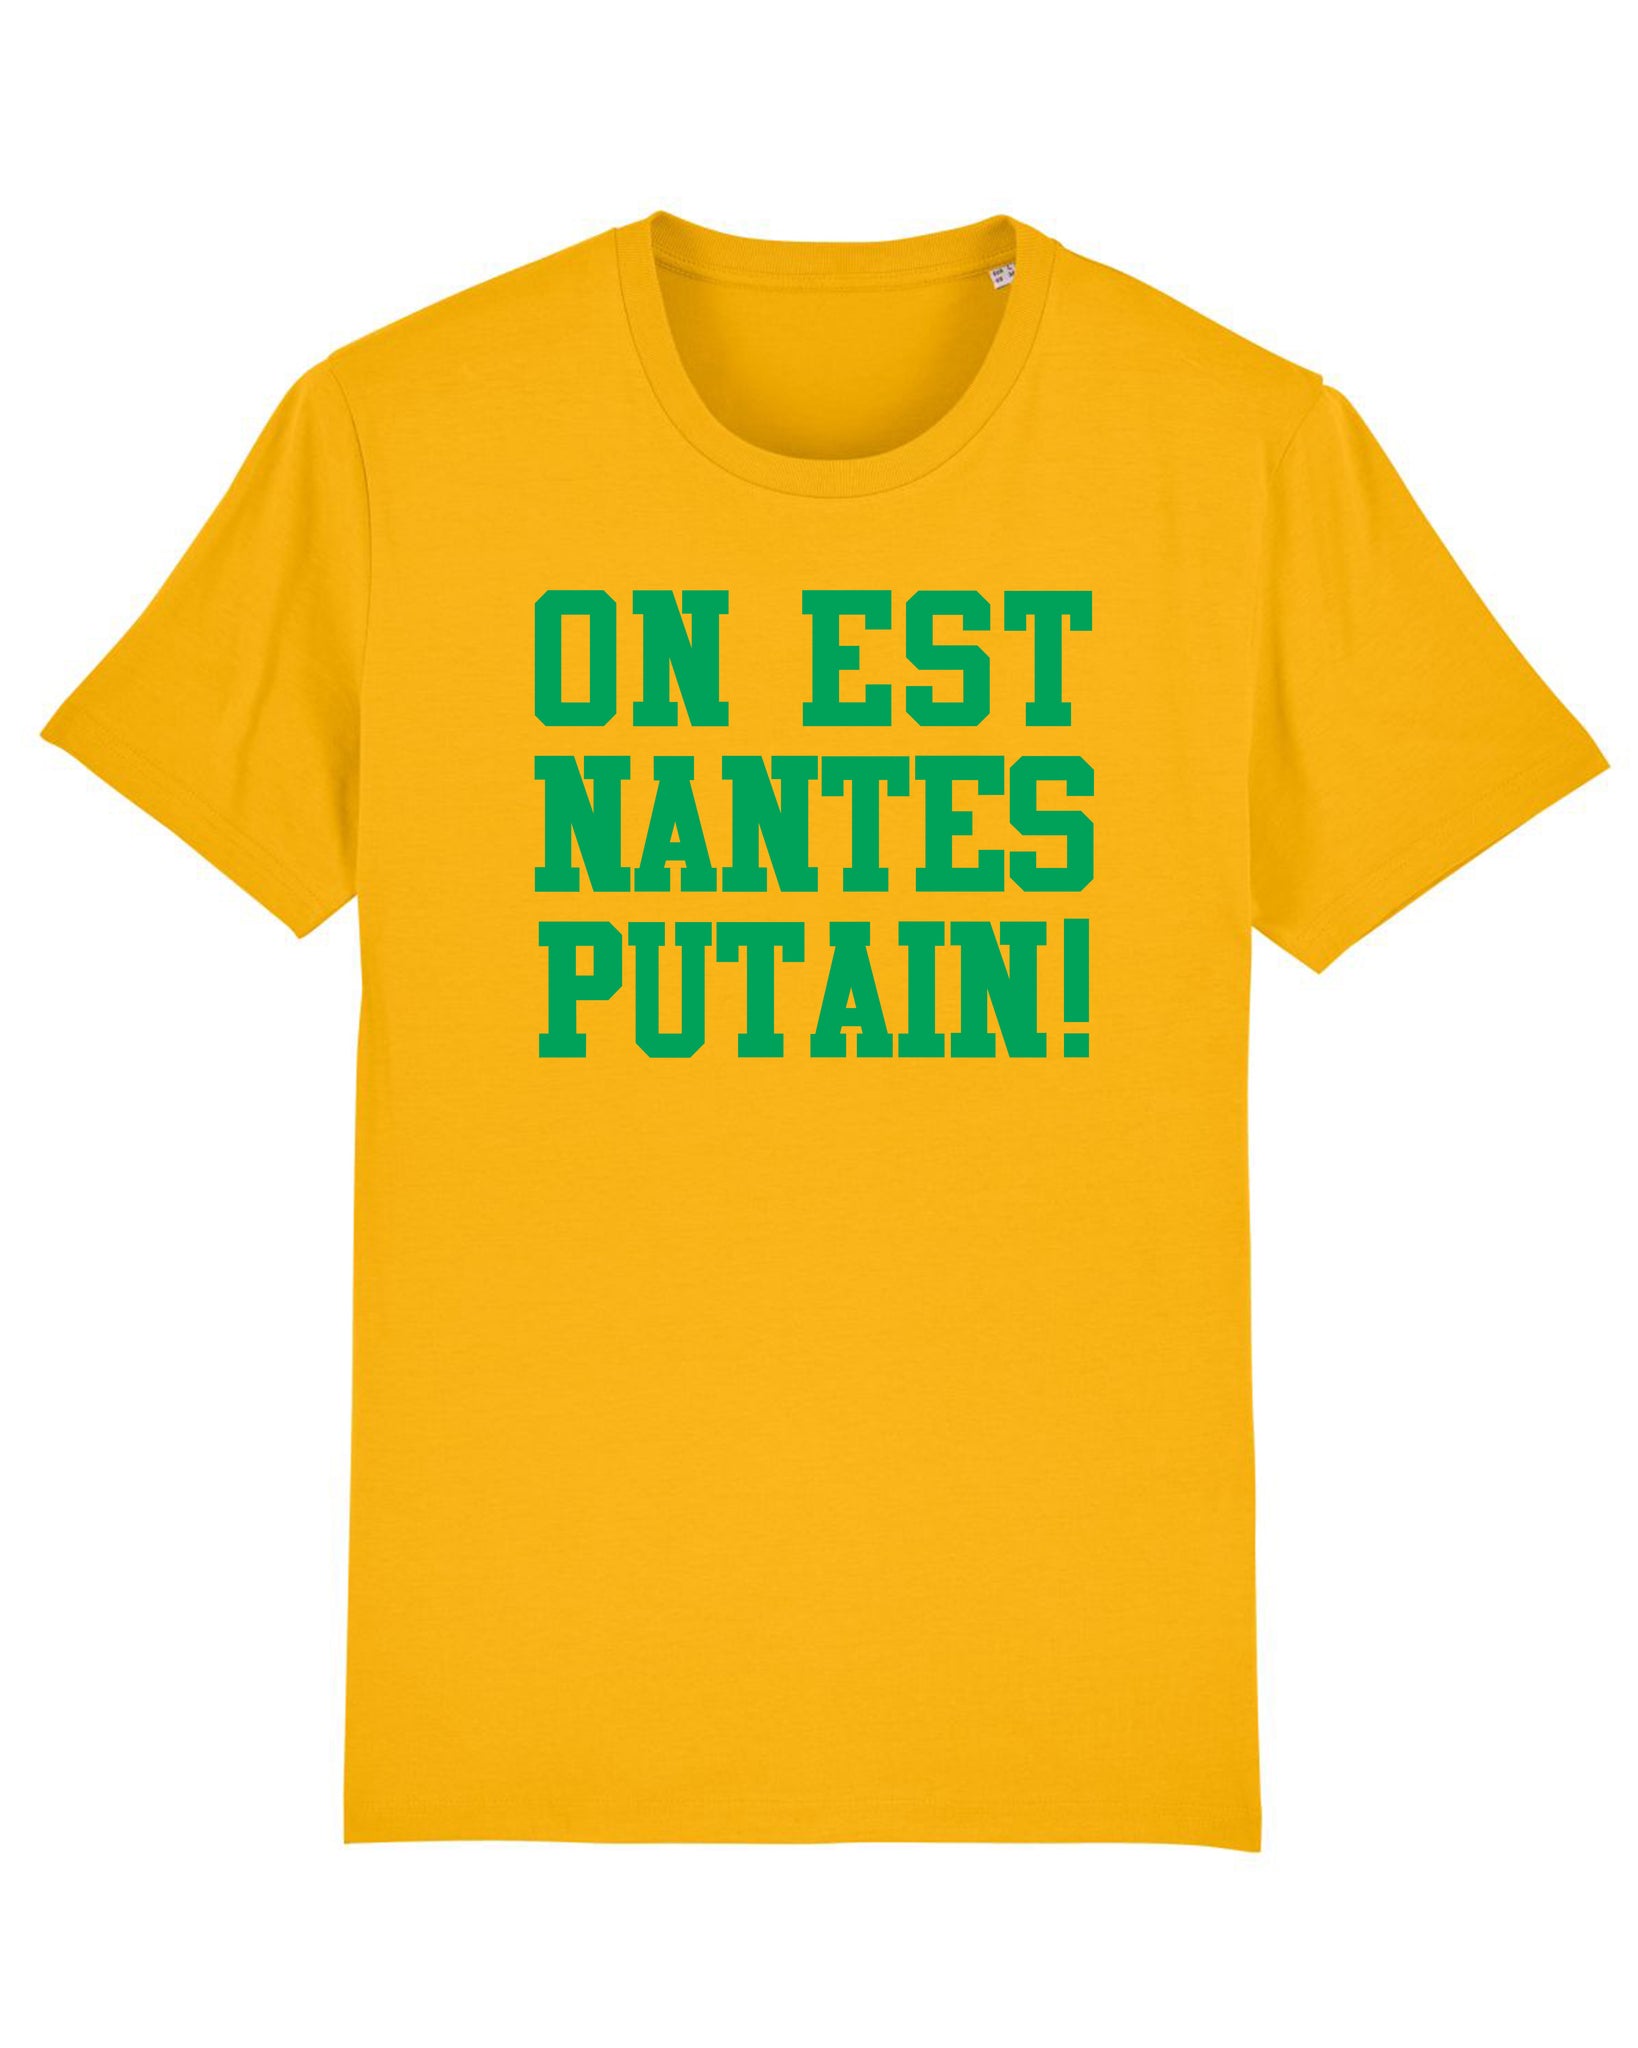 Tee Shirt On est Nantes putain !